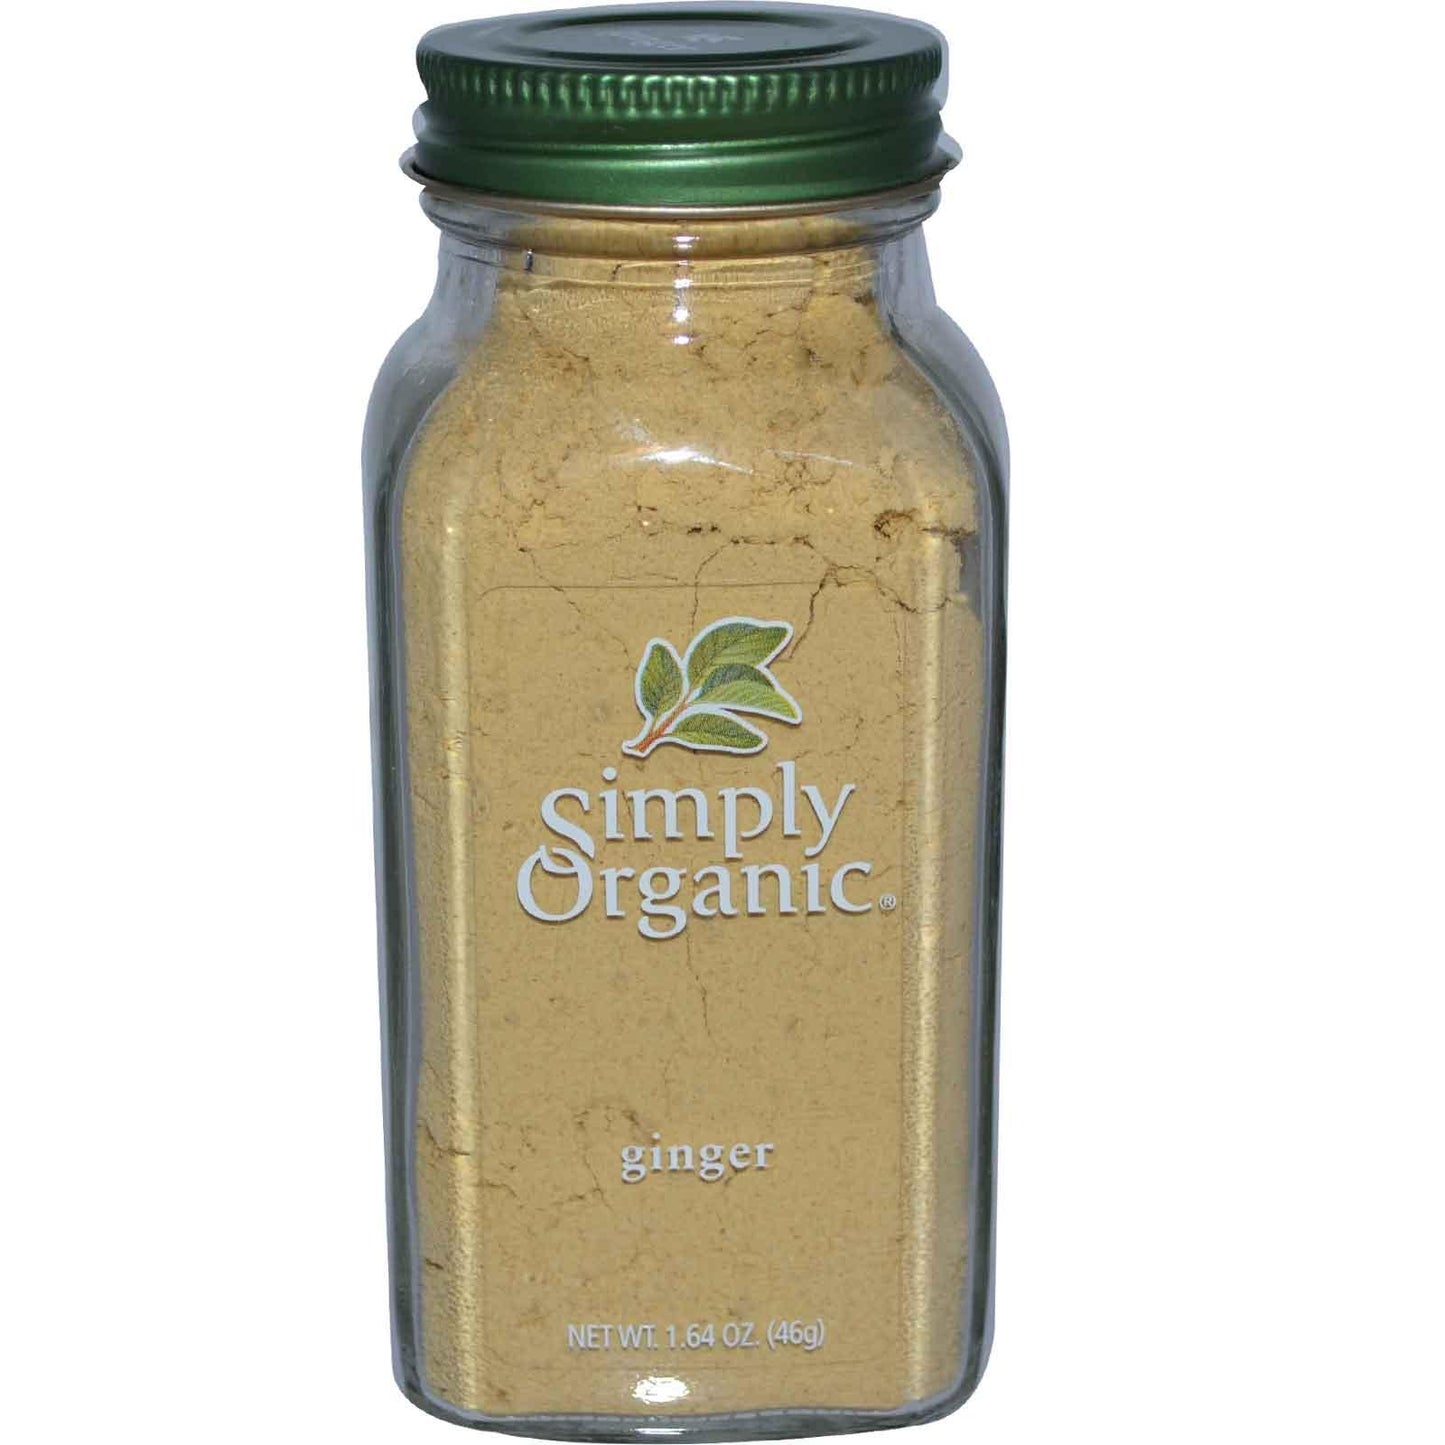 Simply Organic Ginger 46g